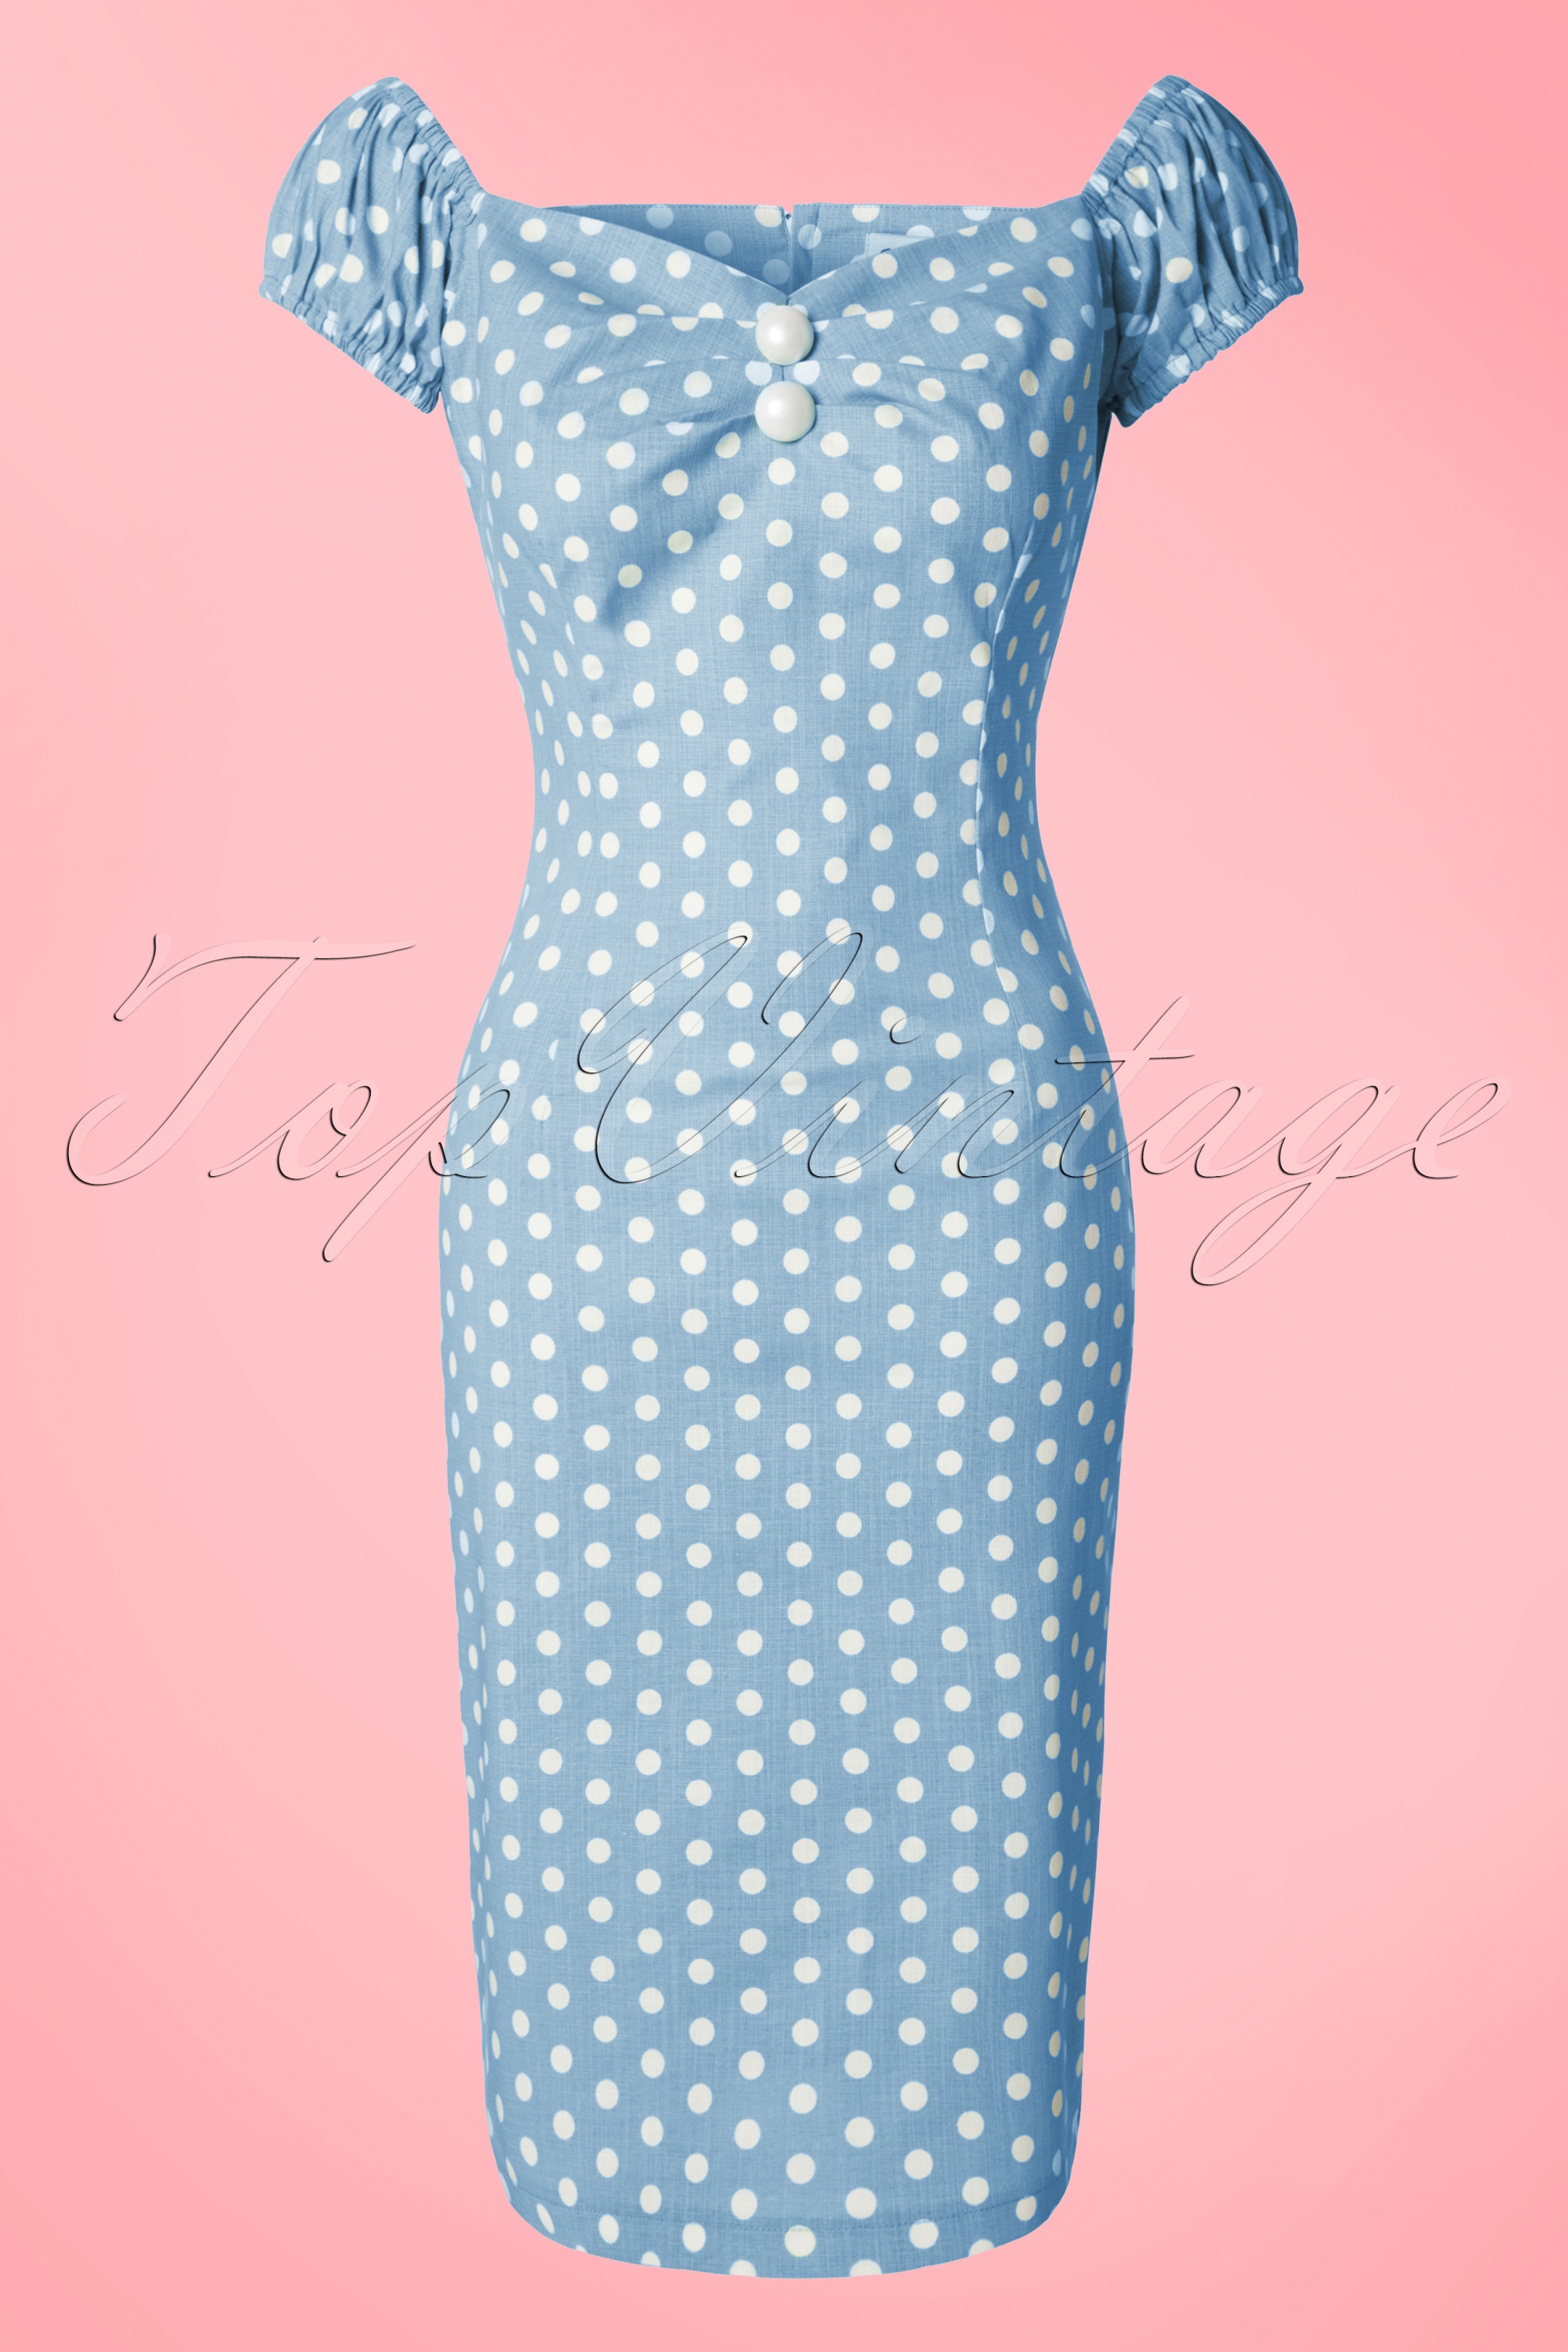 Collectif Clothing - Dolores Polkadot-jurk in lichtblauw en wit 2